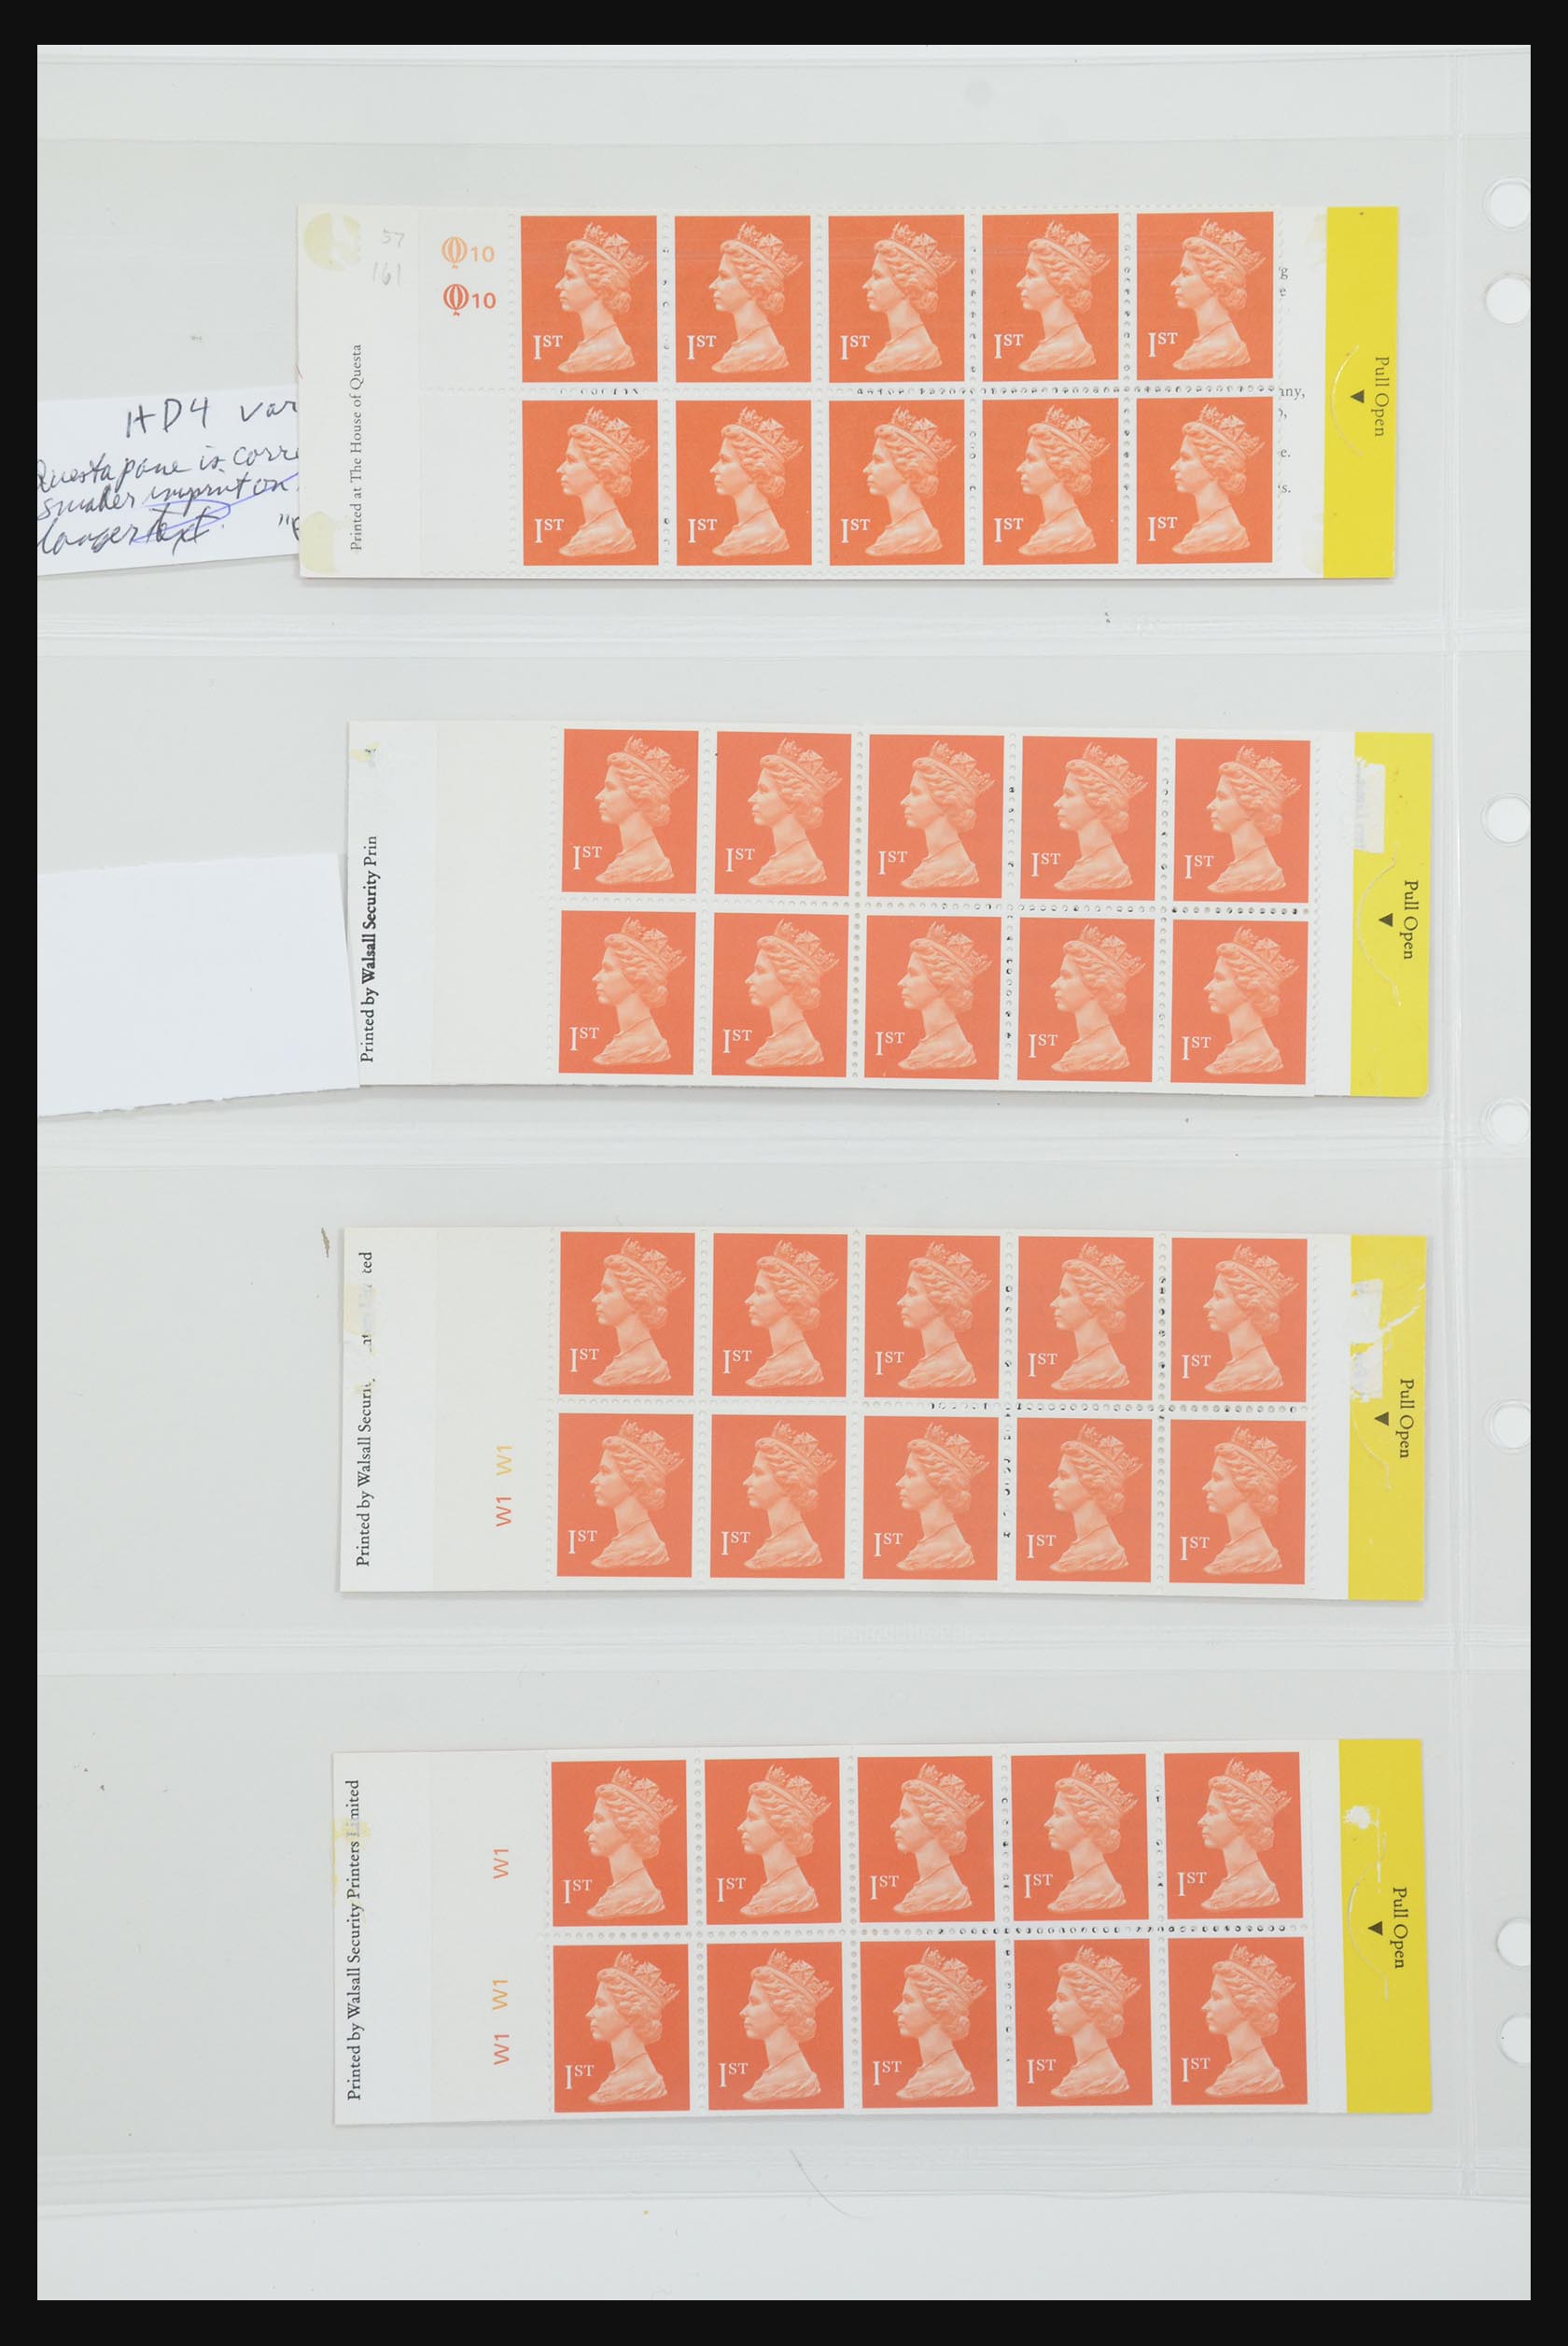 31959 096 - 31959 Great Britain stampbooklets 1987-2016!!